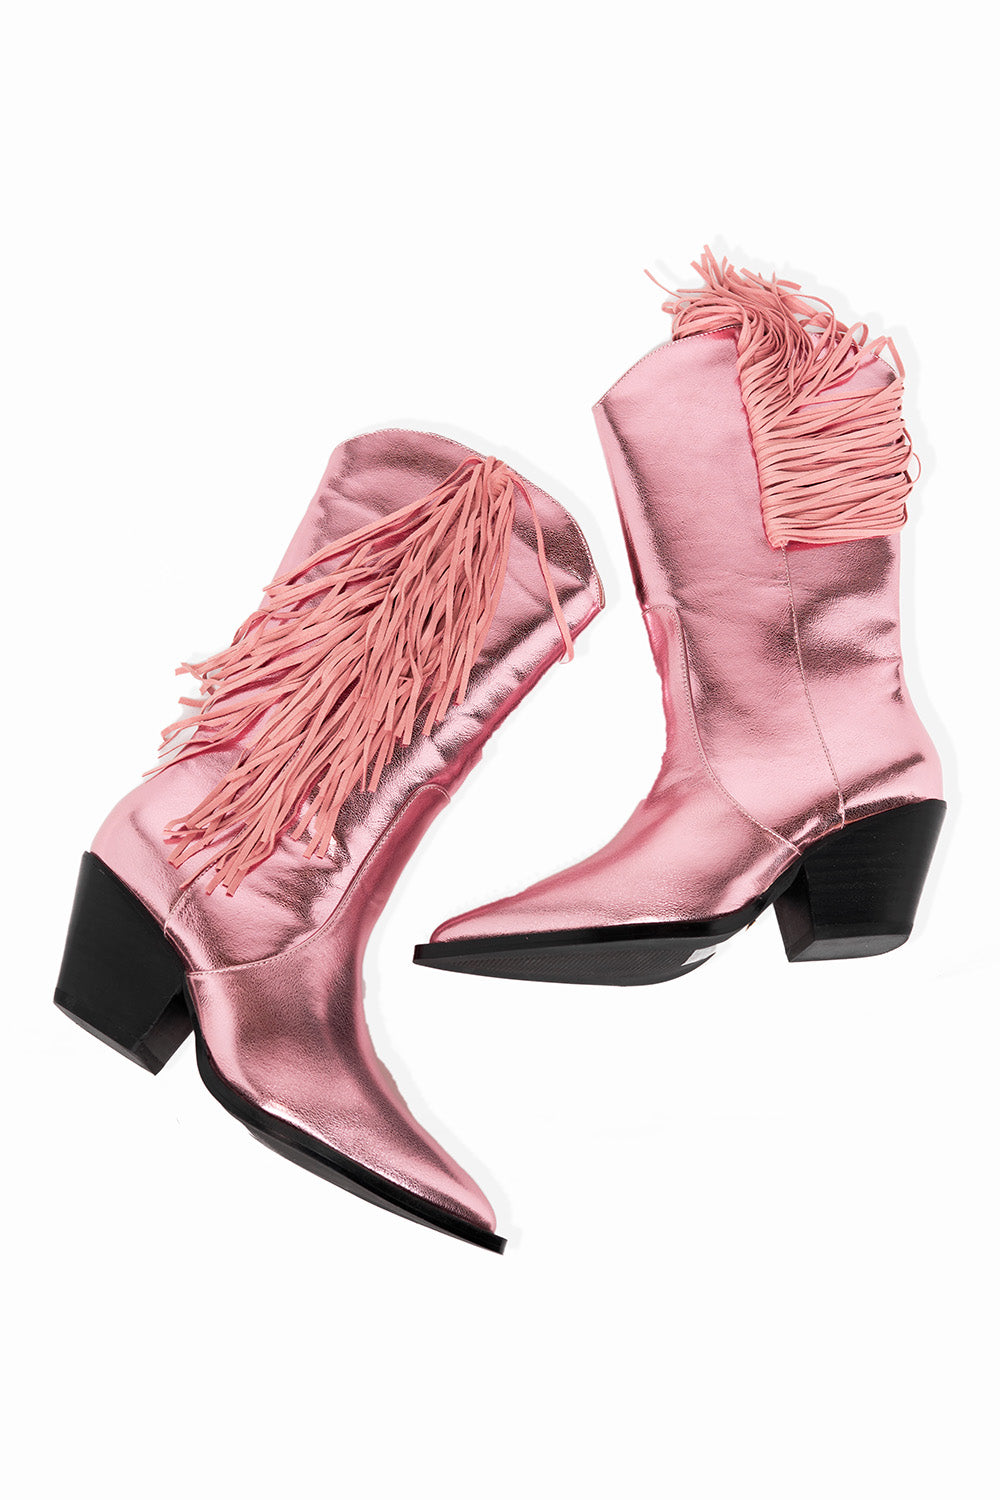 Andi Fringe Boot - Light Pink - 10 / Pink